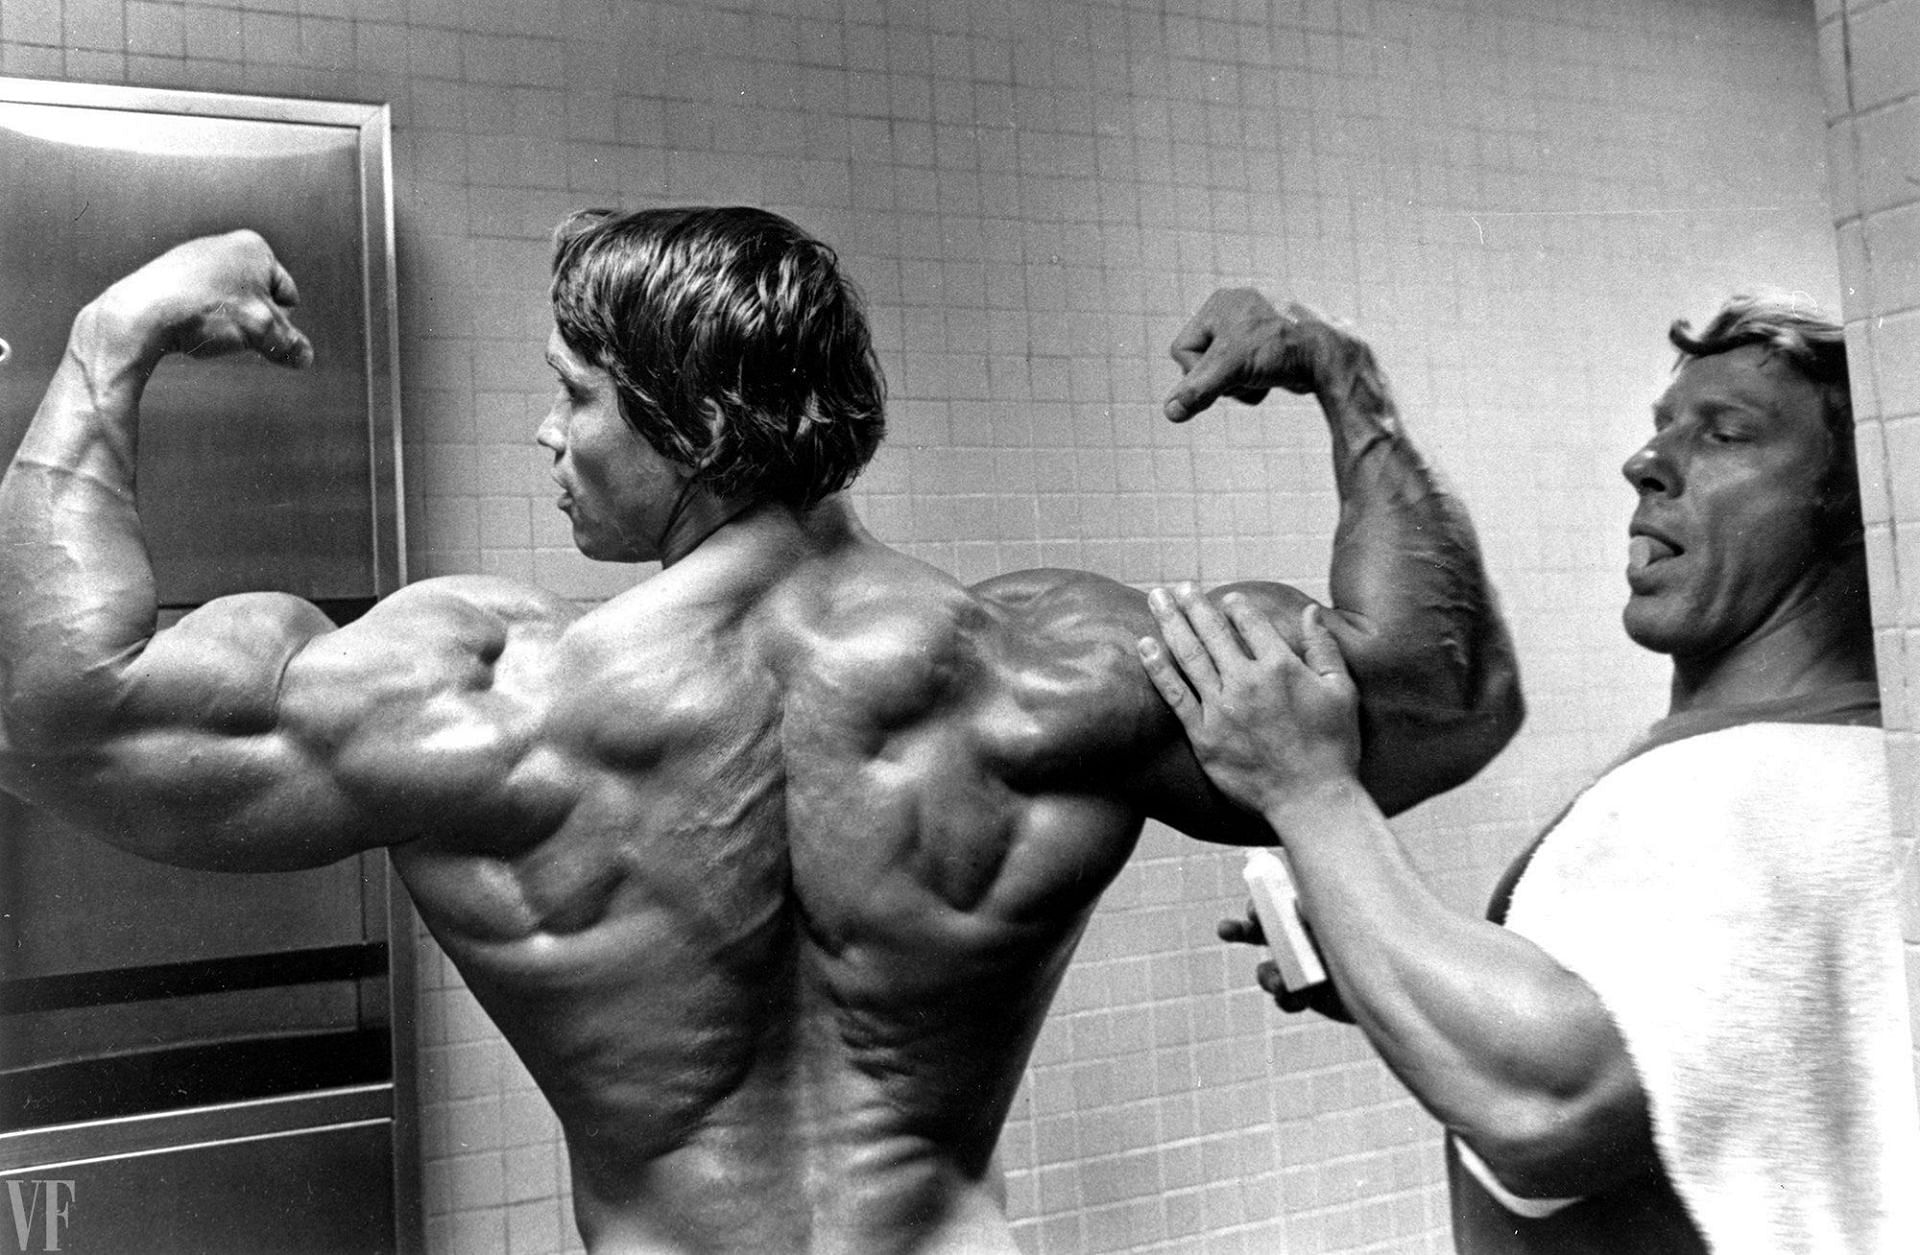 Chase the pump says Arnold Schwarzenegger. (Image via Pinterest)